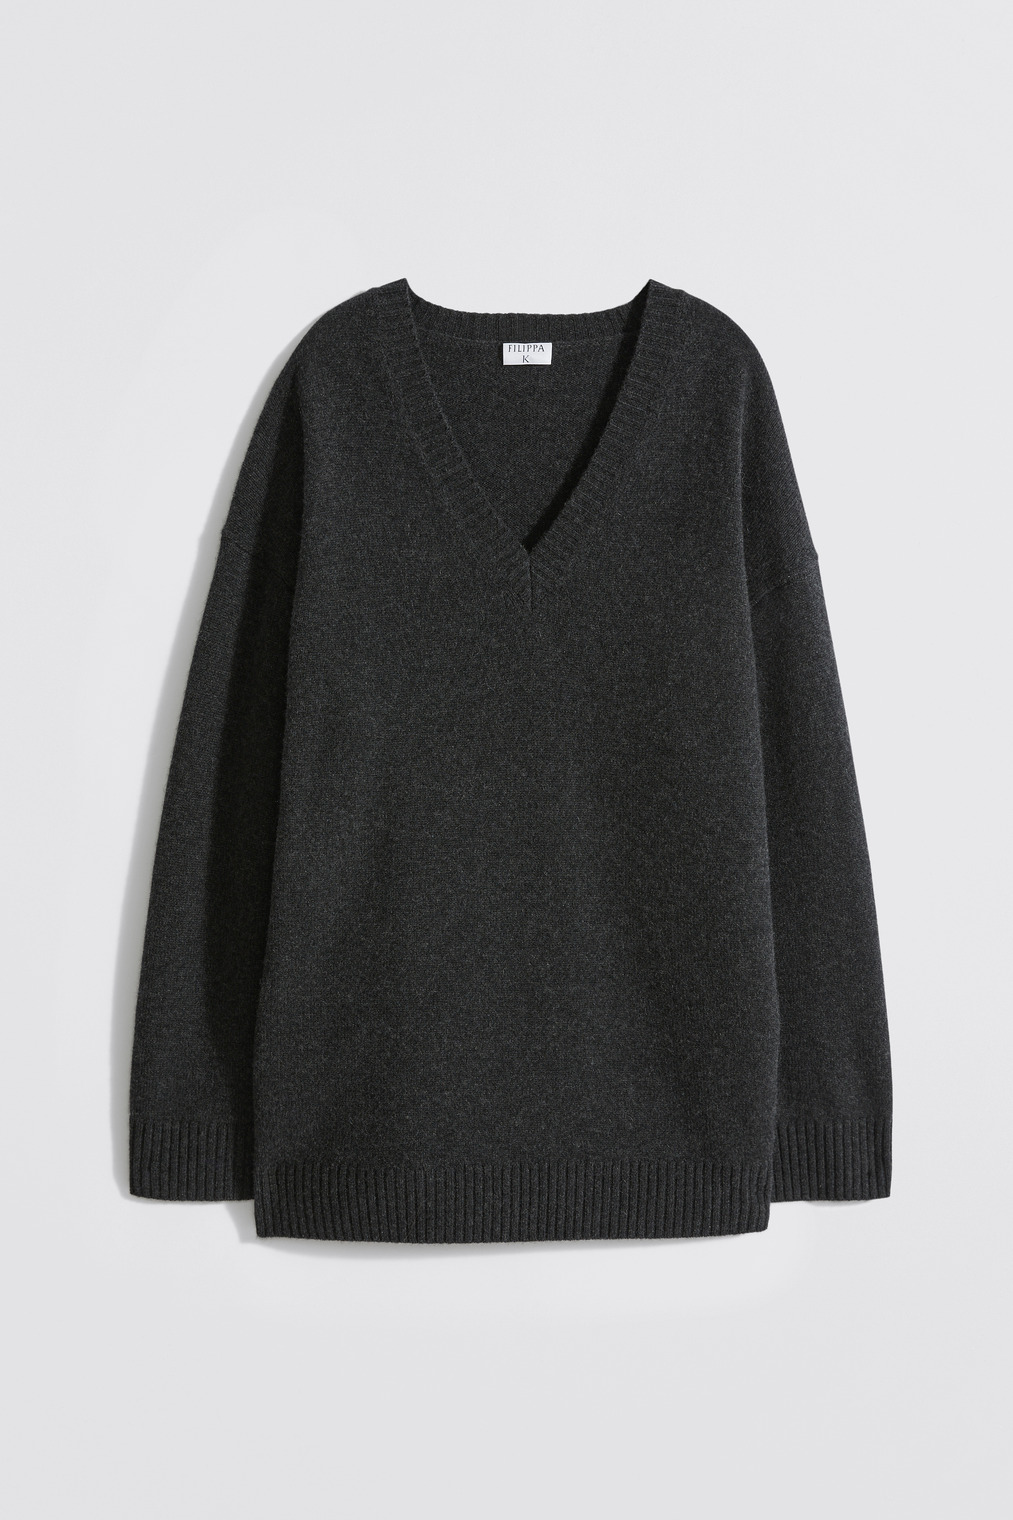 Cynthia cashmere sweater by Filippa K - anthracite melange